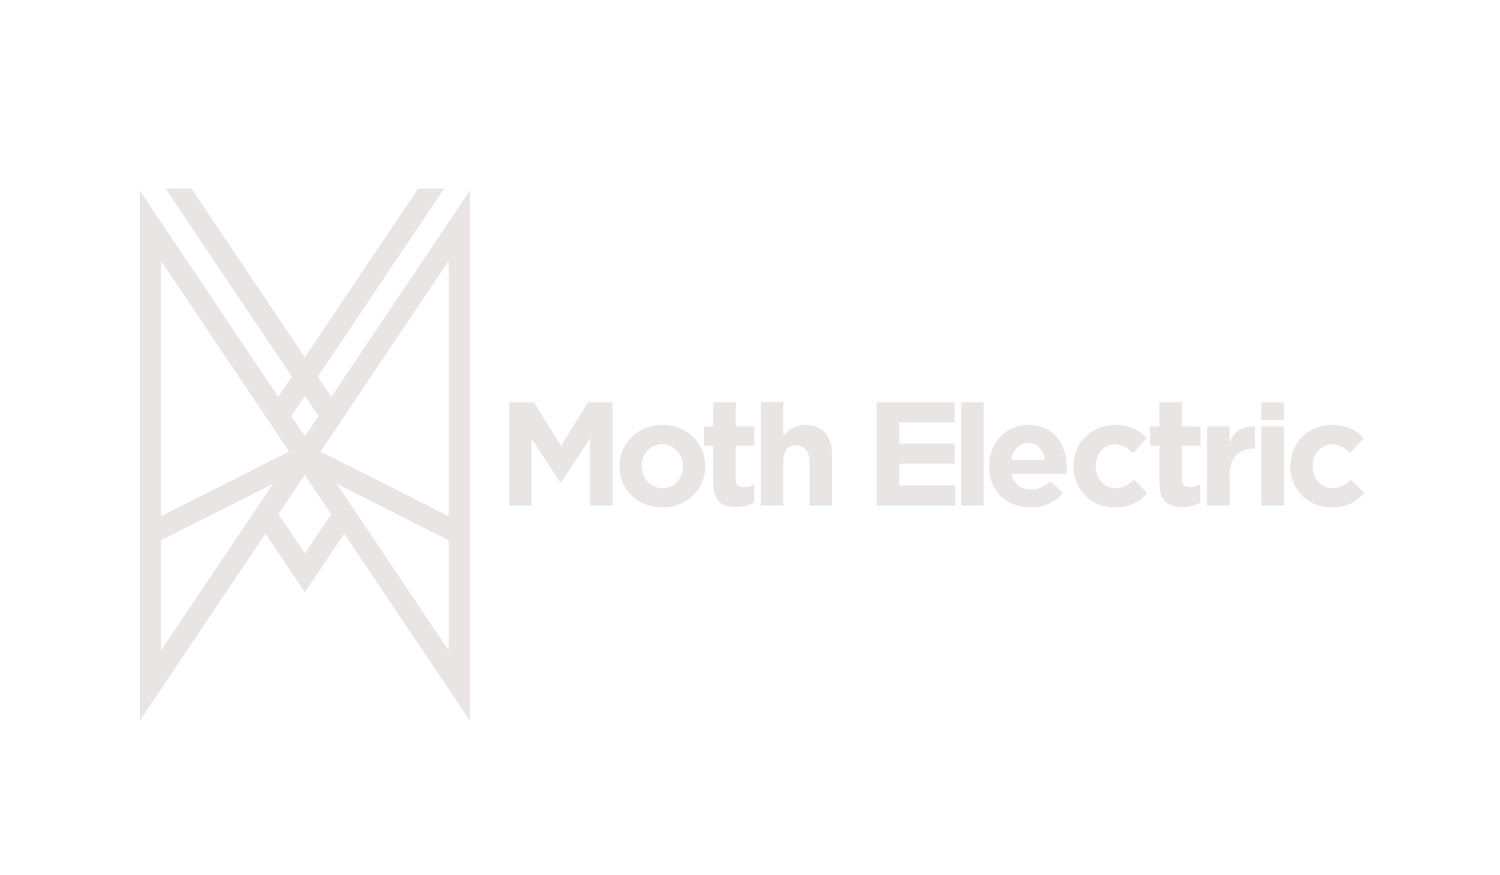 Moth Electric